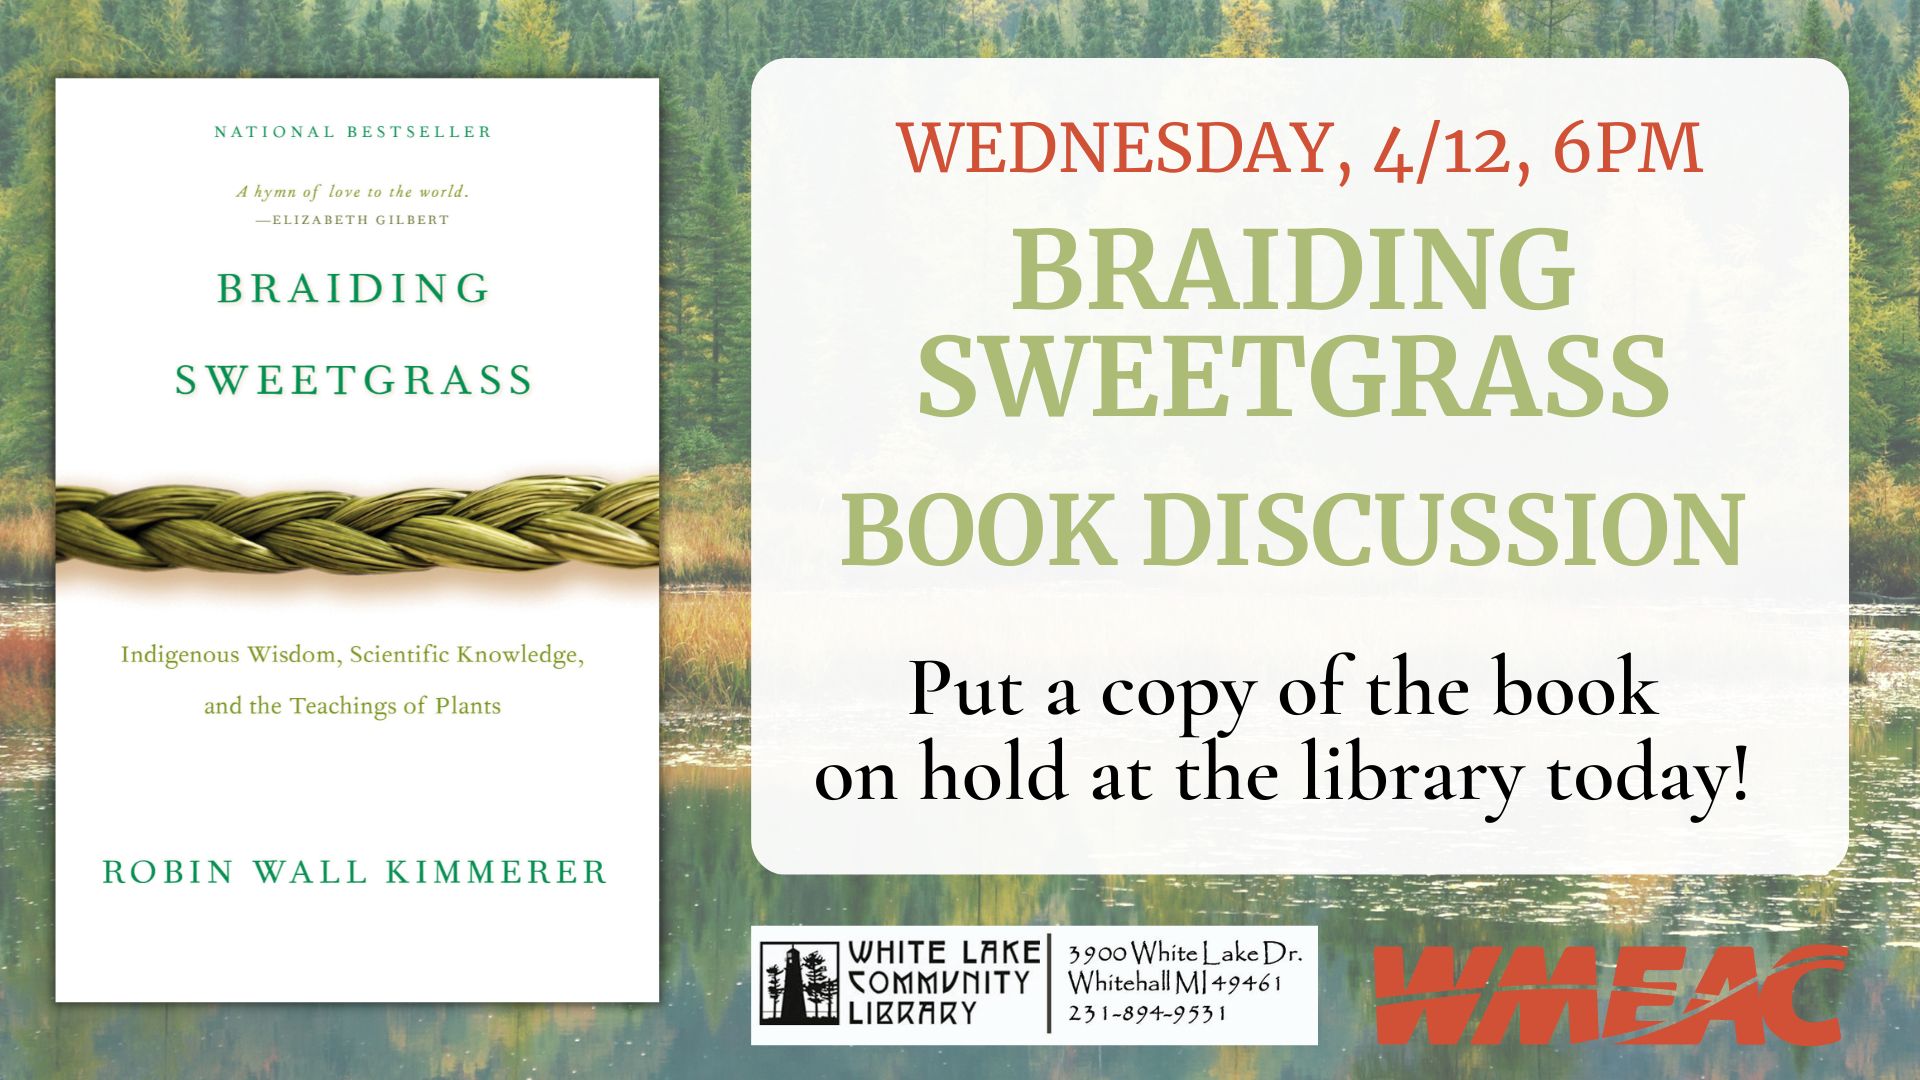 WMEAC Sweetgrass Book Discussion.jpg